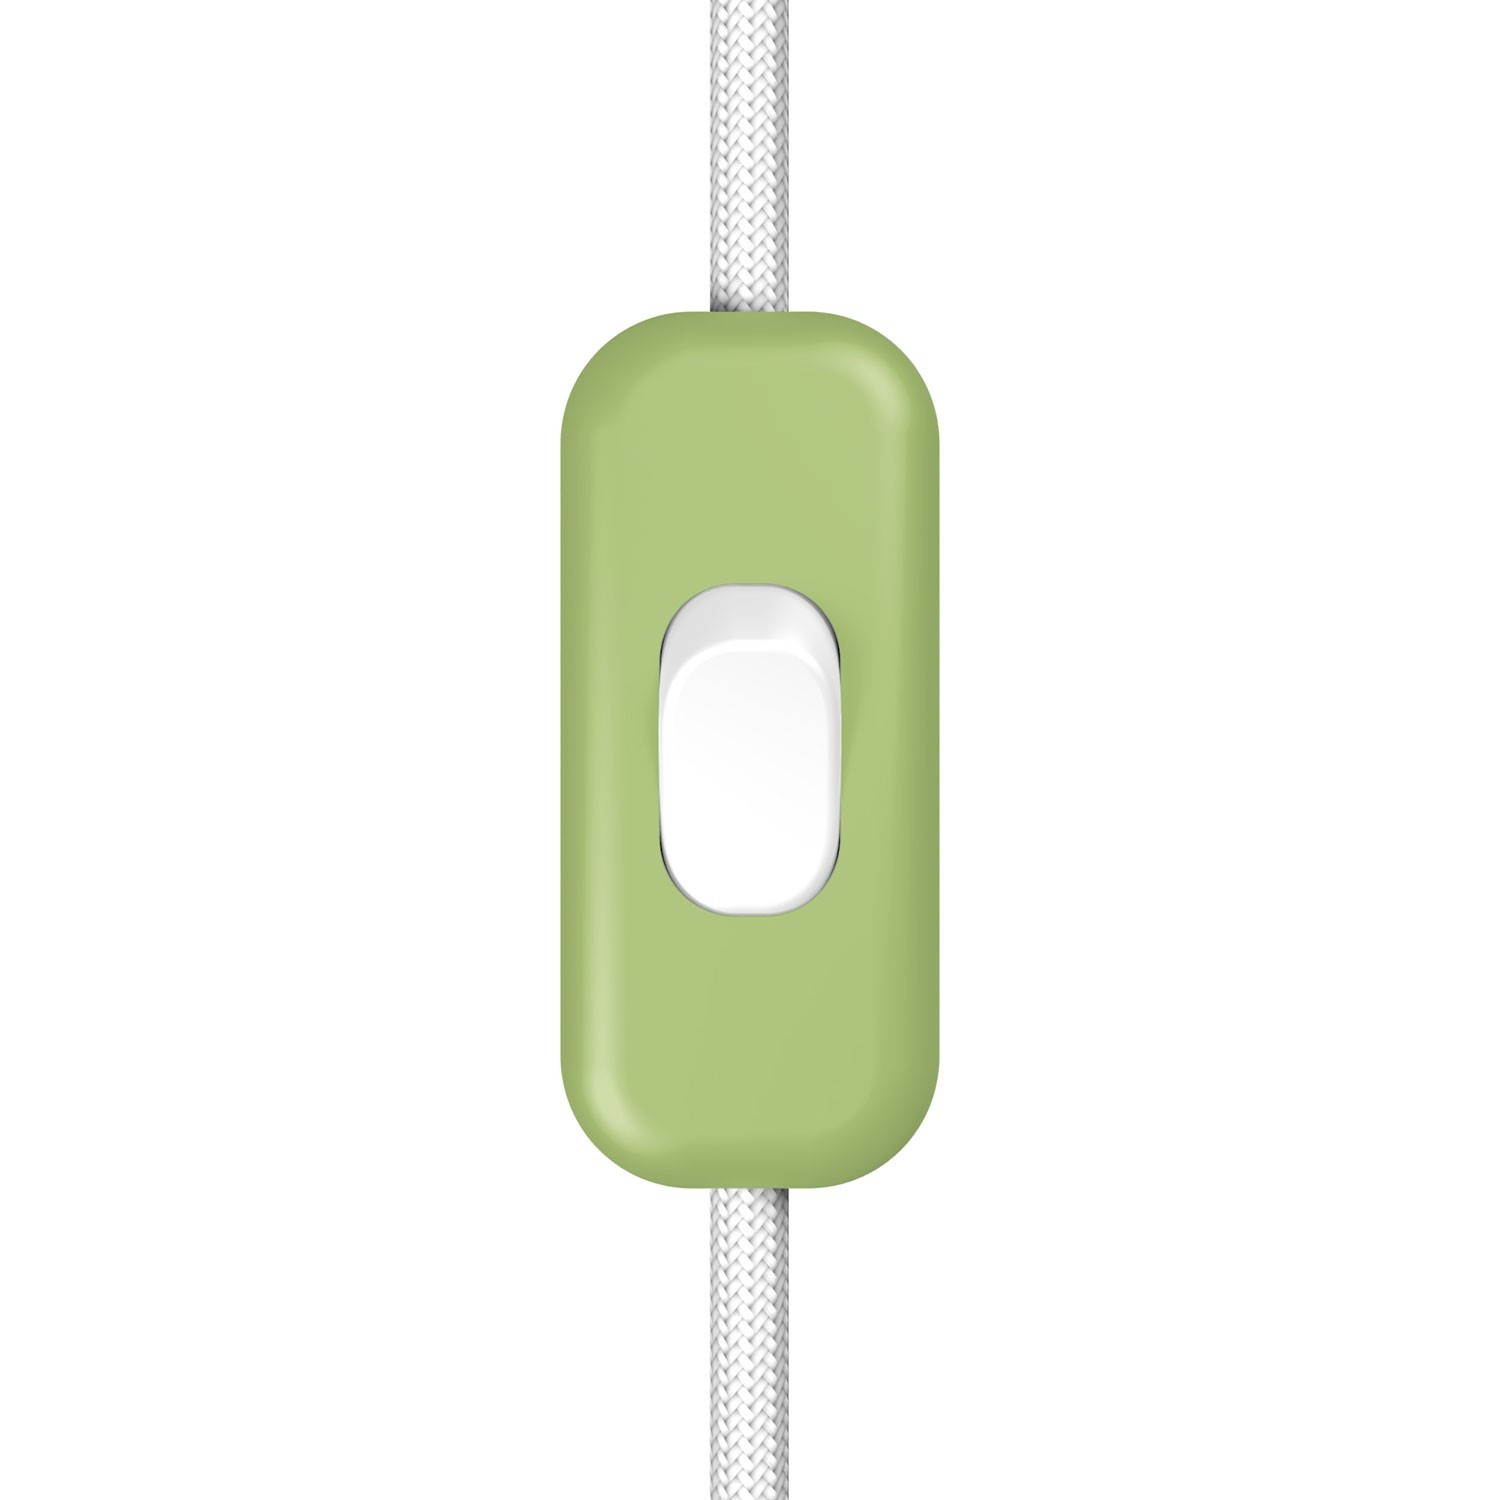 Interruptor unipolar Creative Switch verde prado